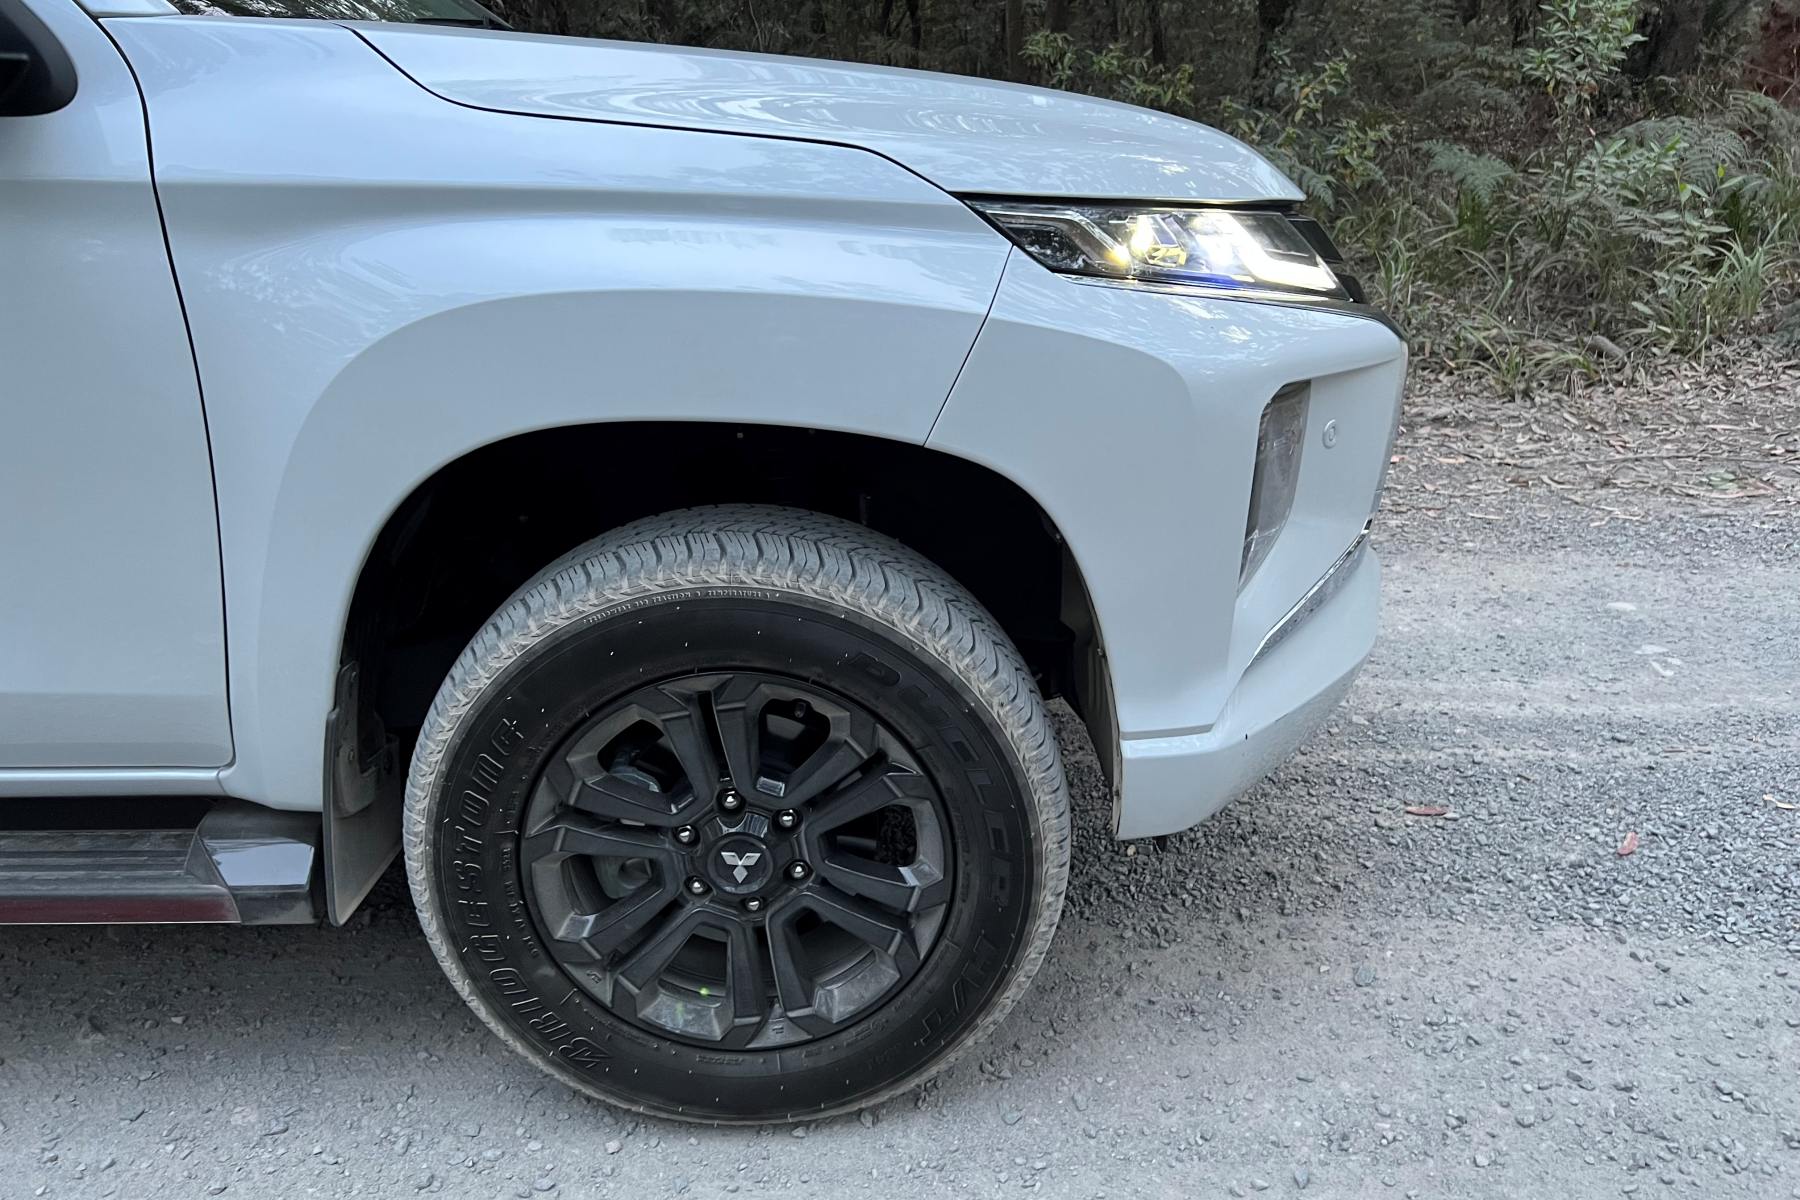 Mitsubishi Triton GLS Sport 4WD Dual Cab Ute front wheel tyre and brakes